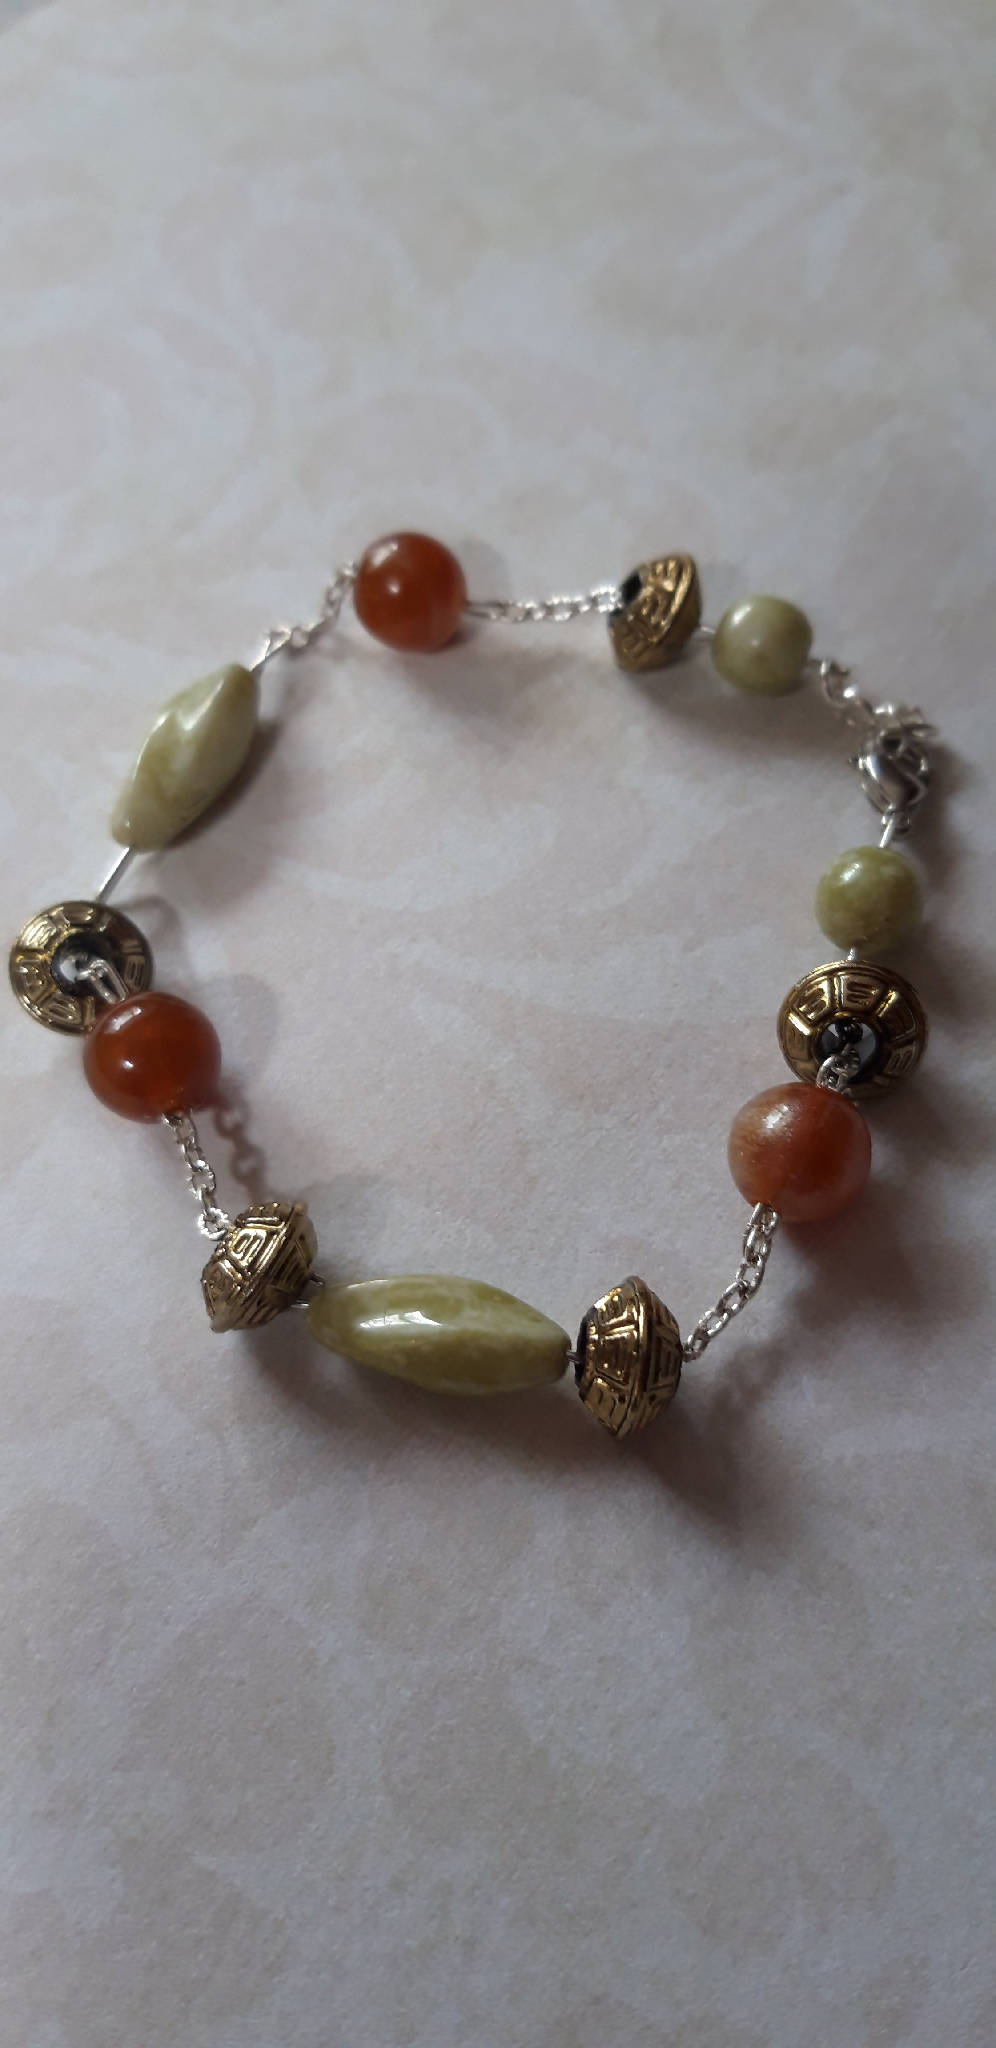 Green bead bracelet